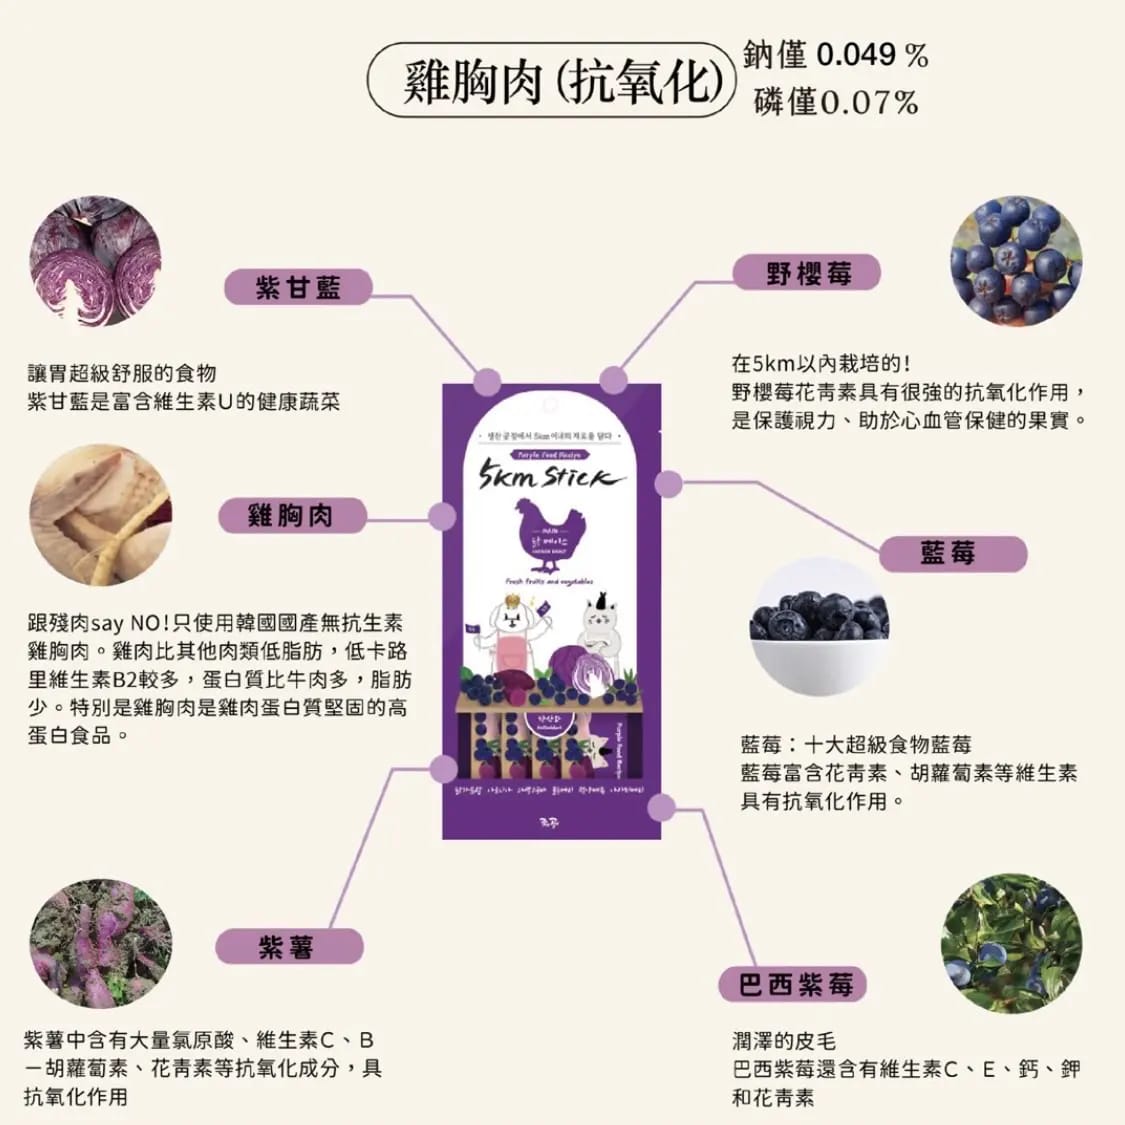 5km Stick - 抗氧化【紫色雞肉】營養蔬果肉泥貓狗小食 14g x4